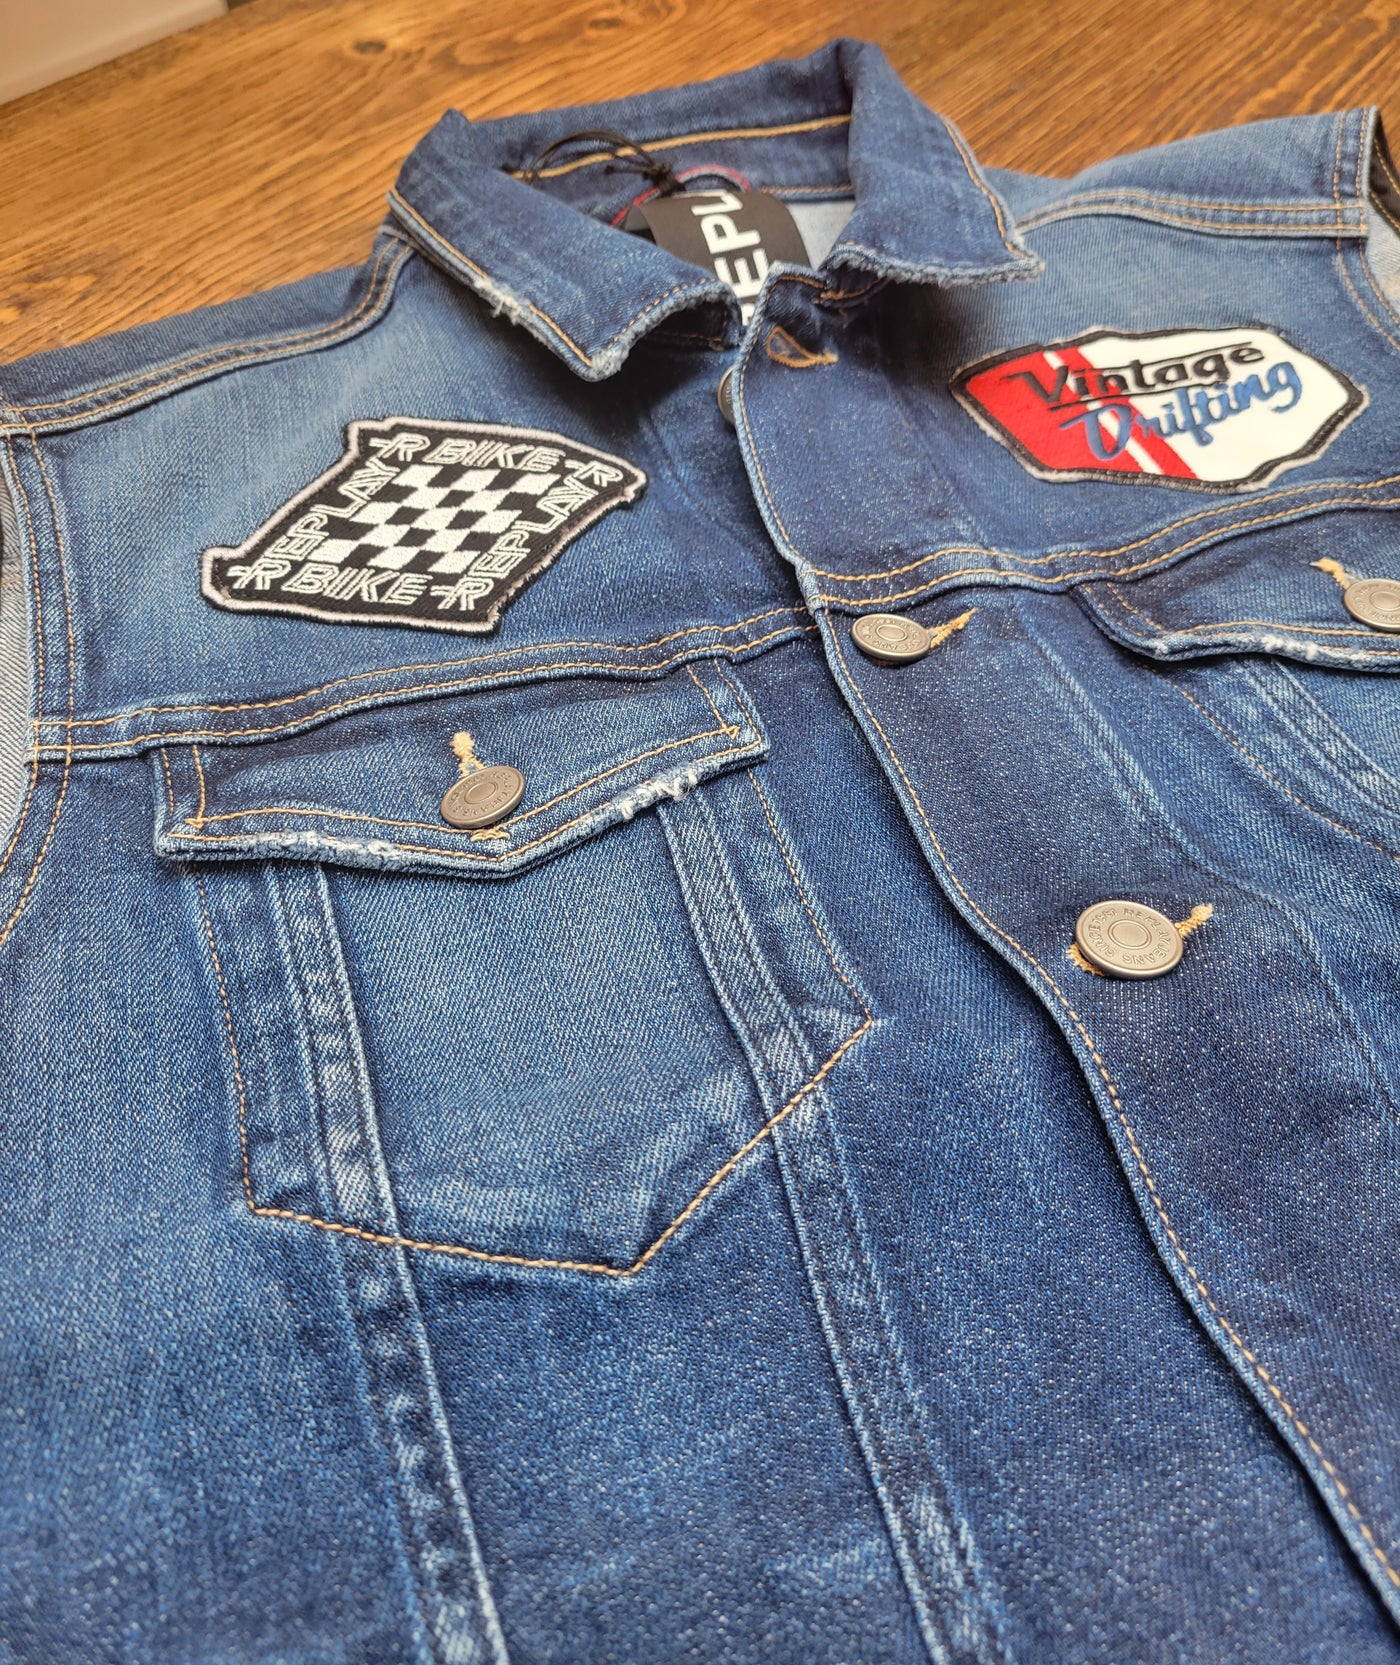 REPLAY Vintage Drifting jean jacket